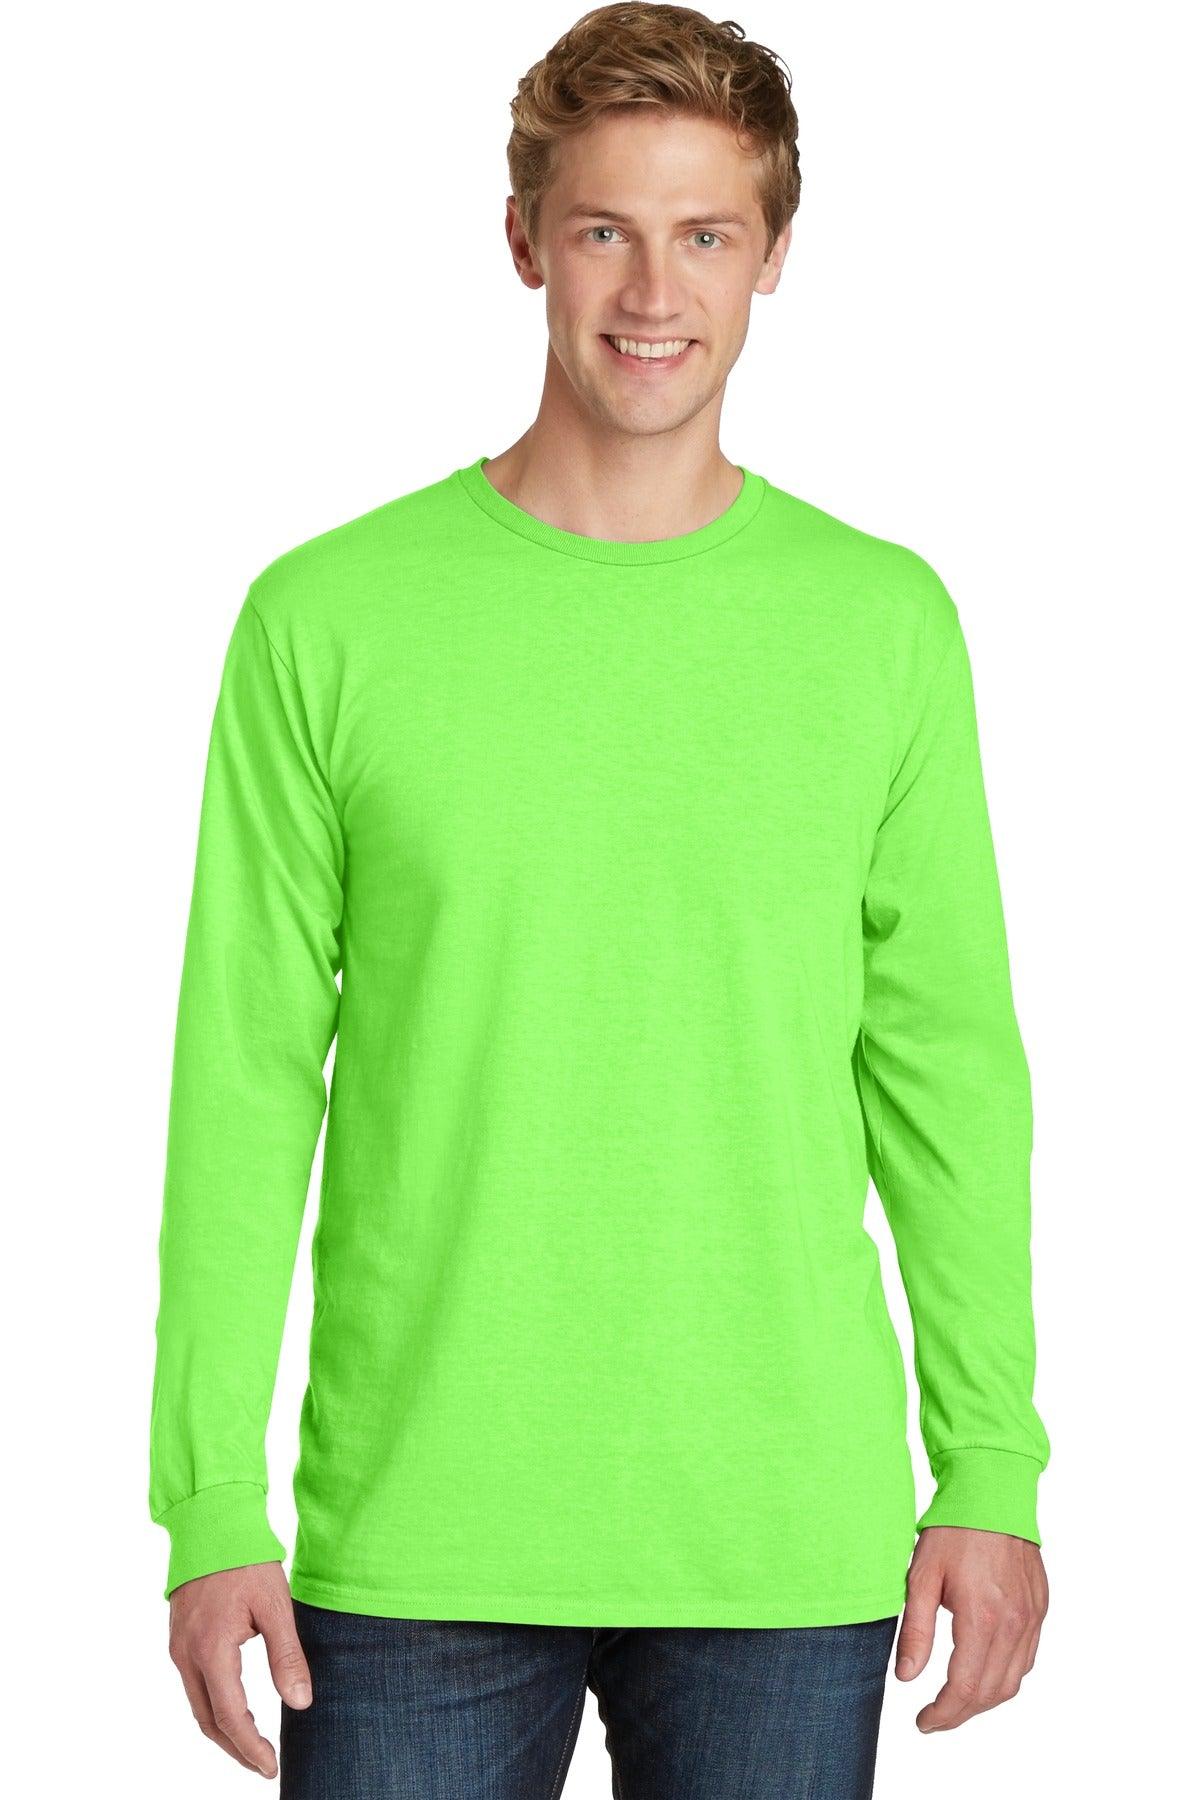 Port & Company Beach Wash Garment-Dyed Crewneck Sweatshirt